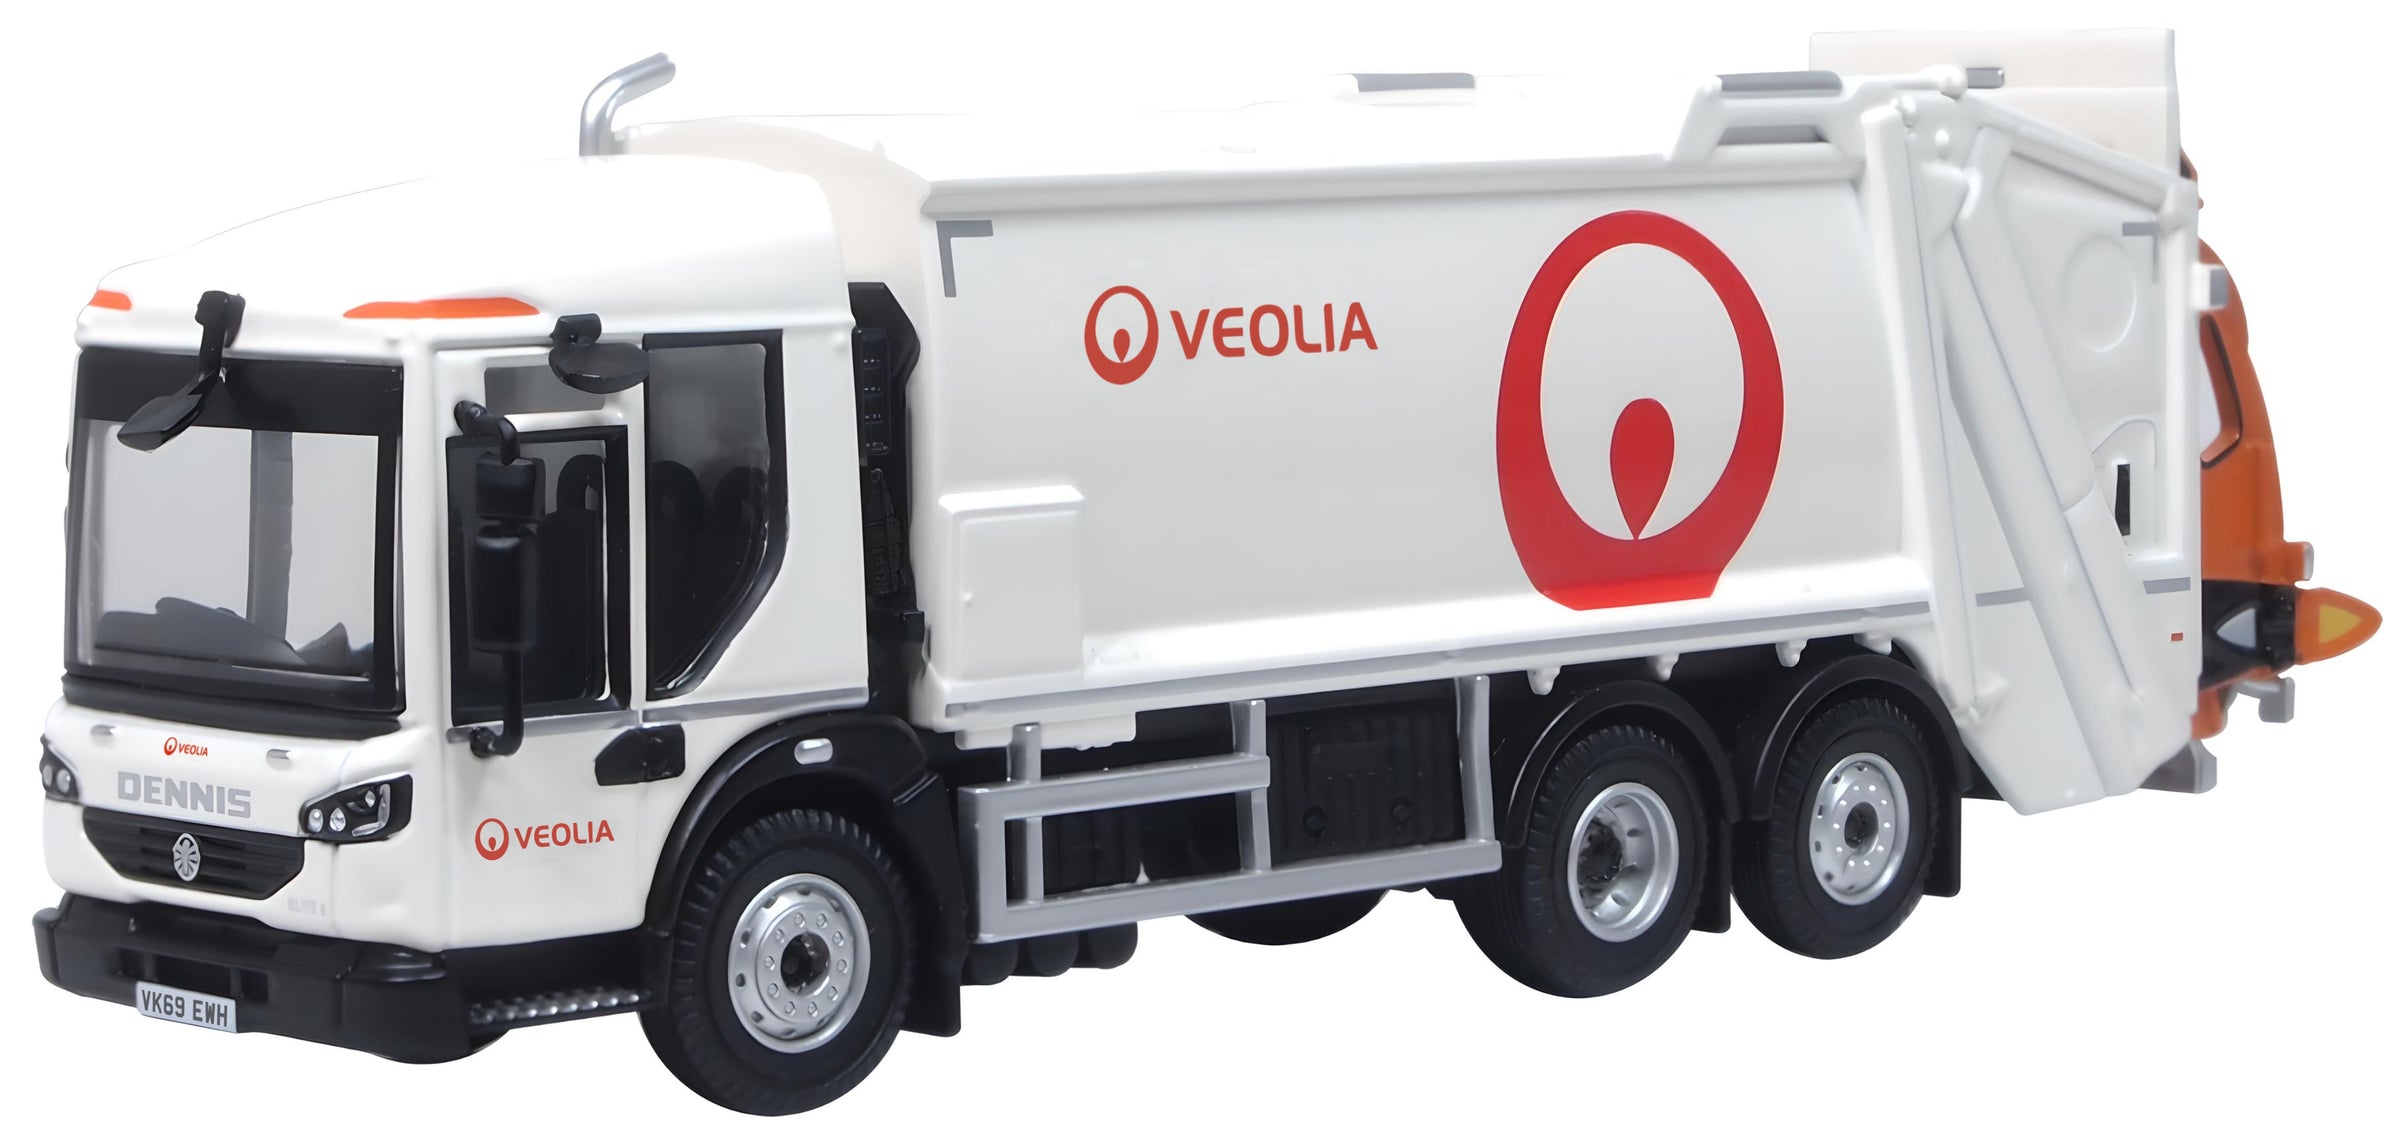 Dennis Eagle Olympus Refuse Truck Veolia - 1:76 Scale